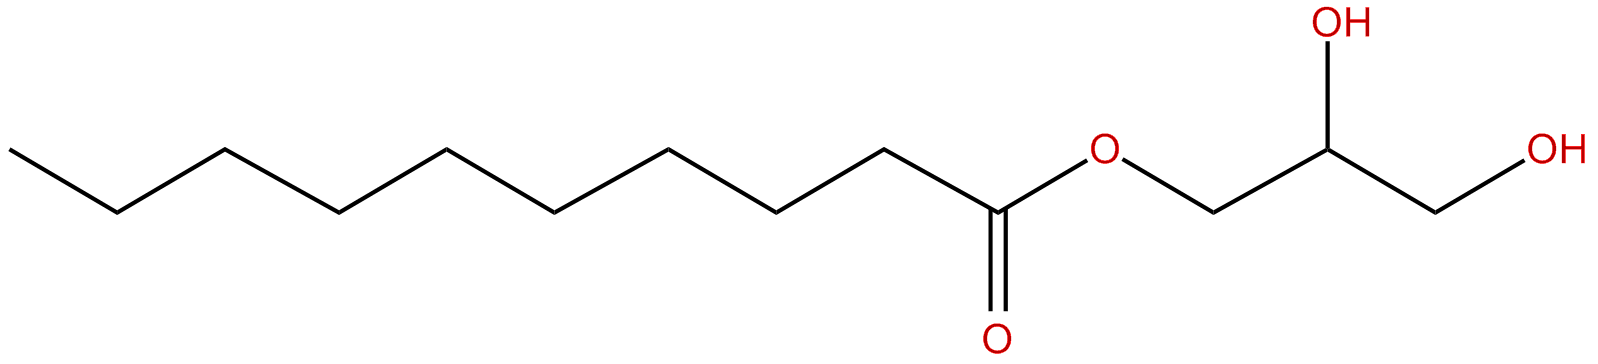 Image of decanoic acid, 2,3-dihydroxypropyl ester